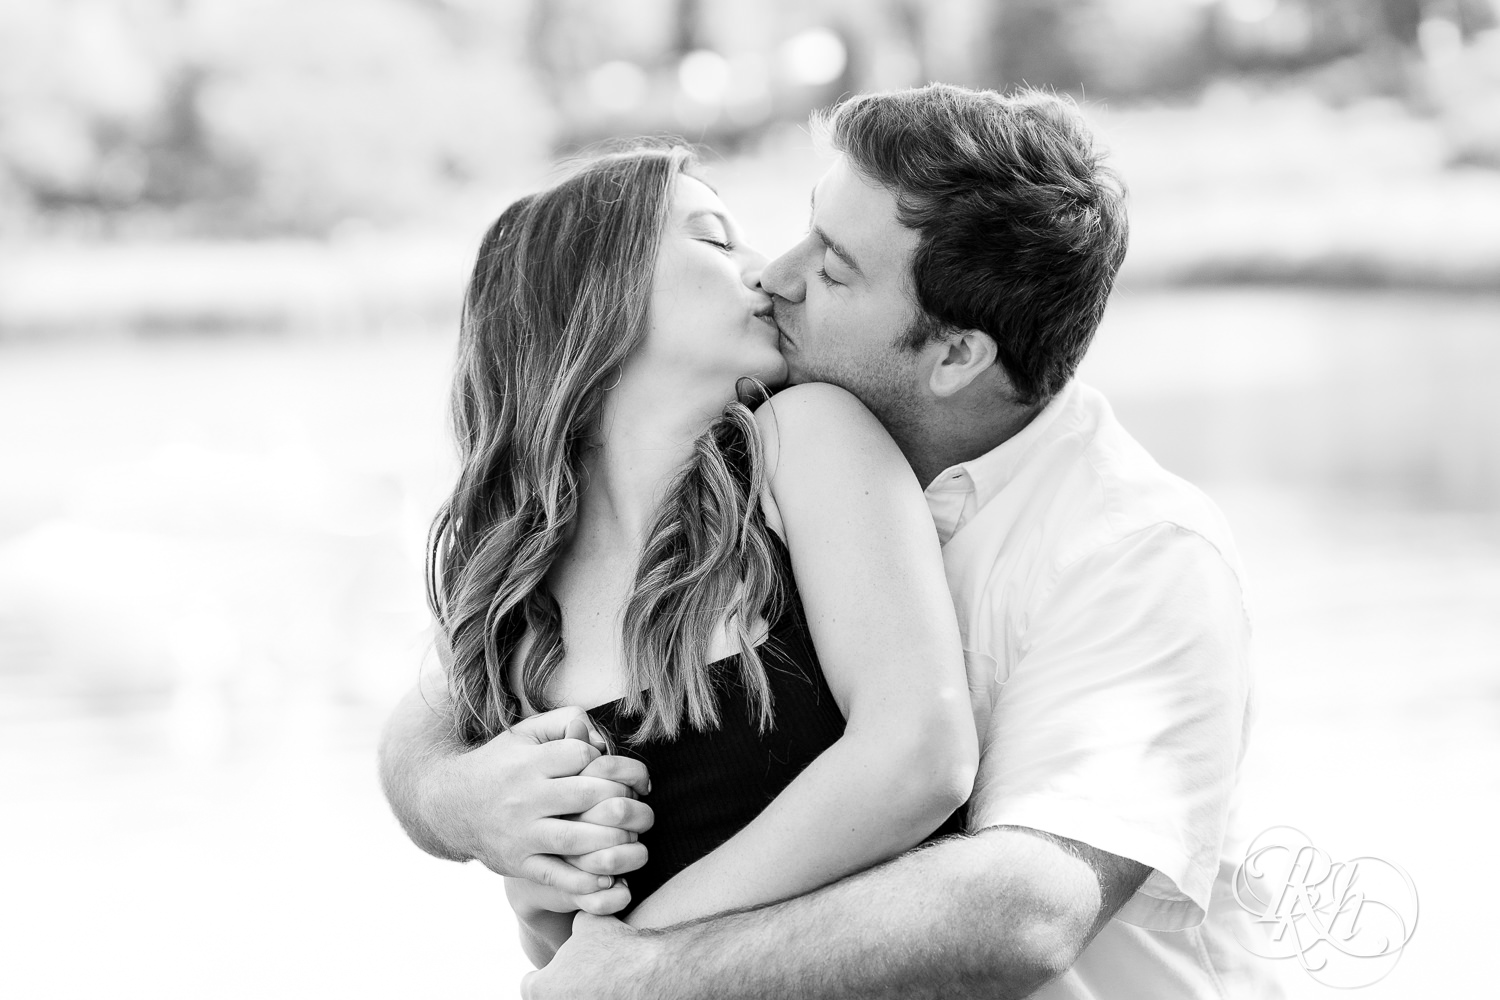 Man and woman kiss during engagement photography at Centennial Lakes Park in Edina, Minnesota.